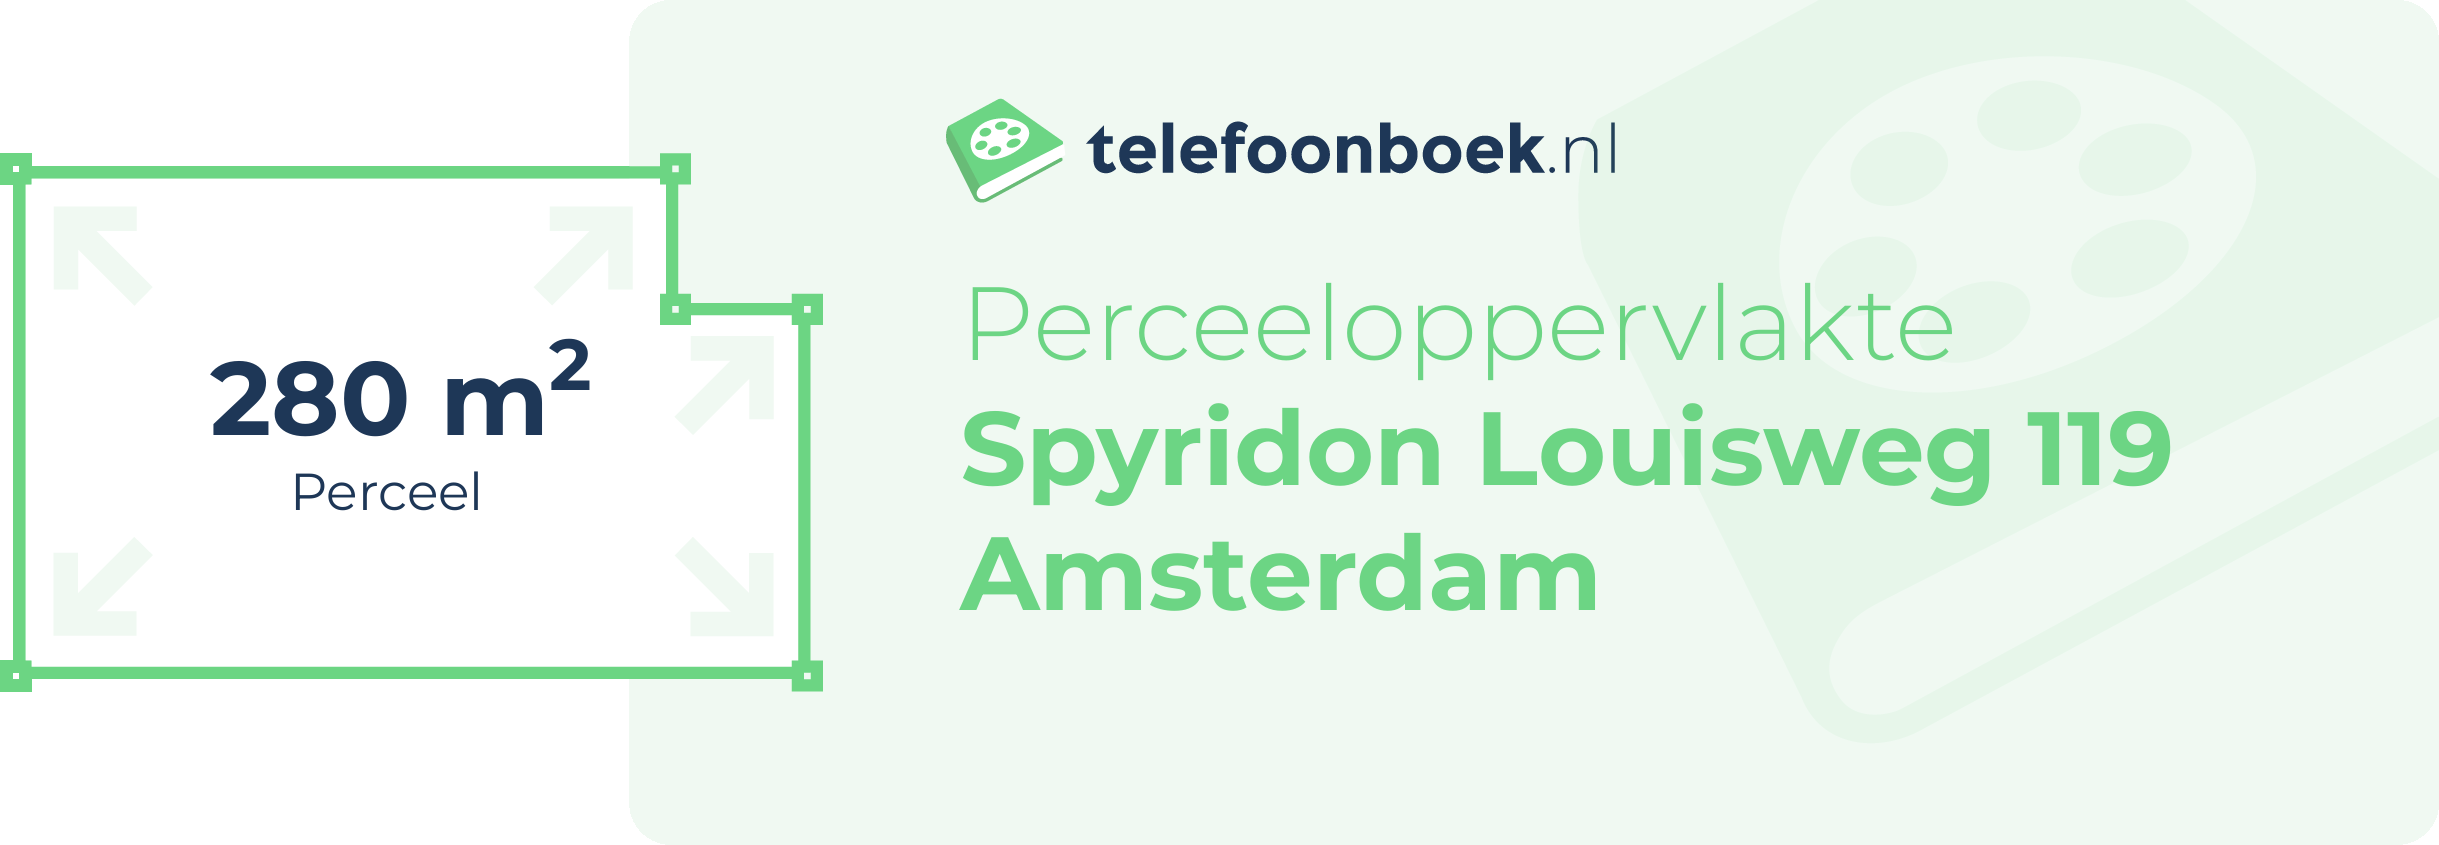 Perceeloppervlakte Spyridon Louisweg 119 Amsterdam